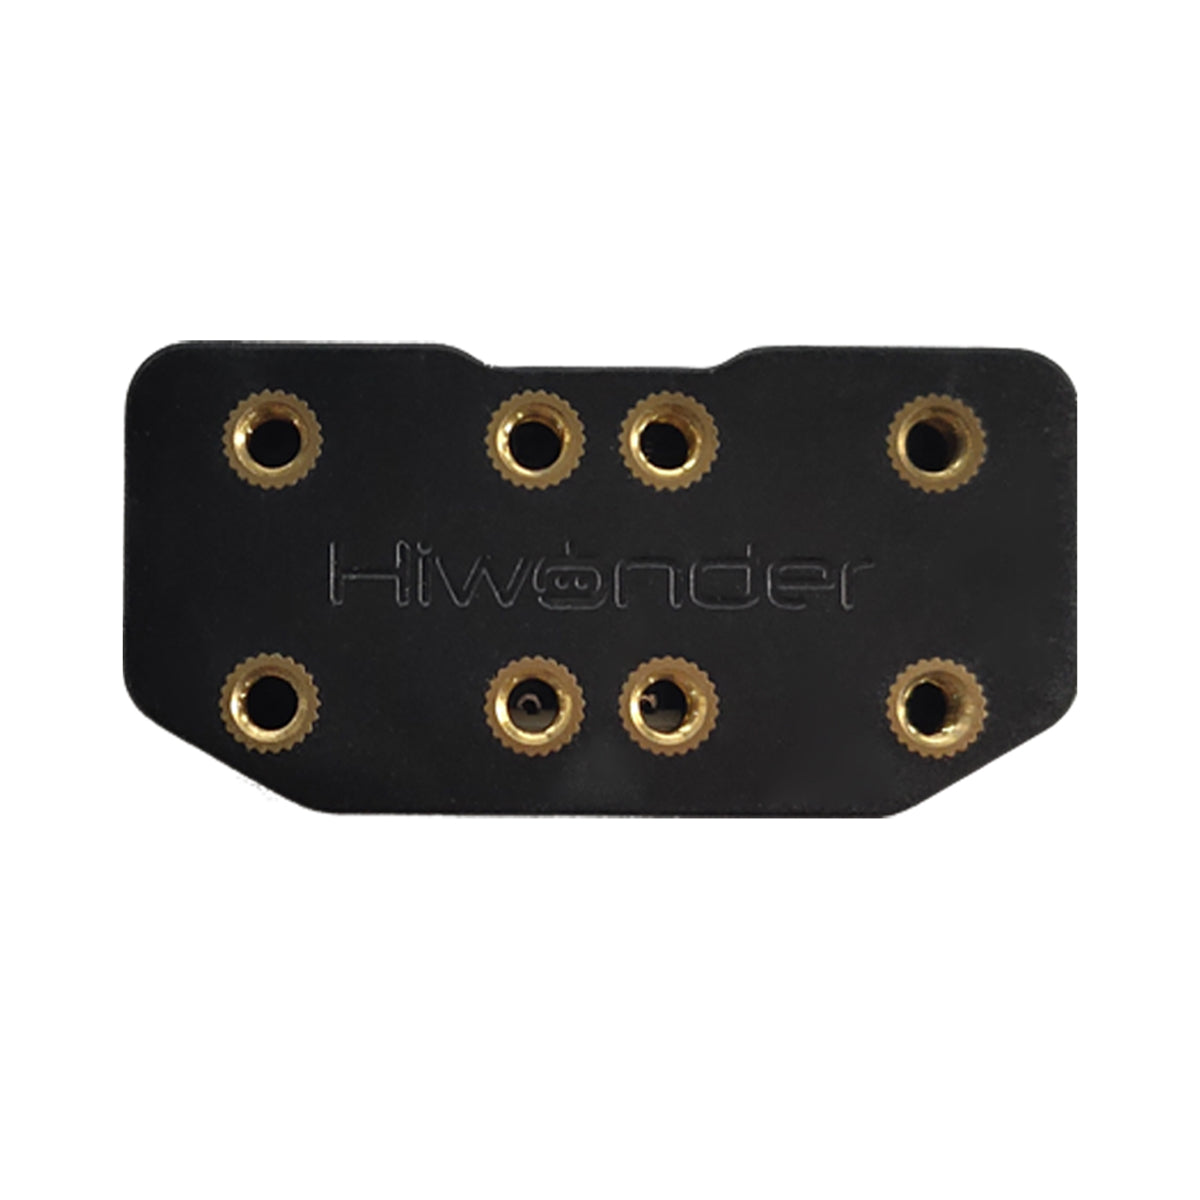 Hiwonder Ultrasonic Module Detection Distance Sensor Compatible with Arduino micro:bit Programming